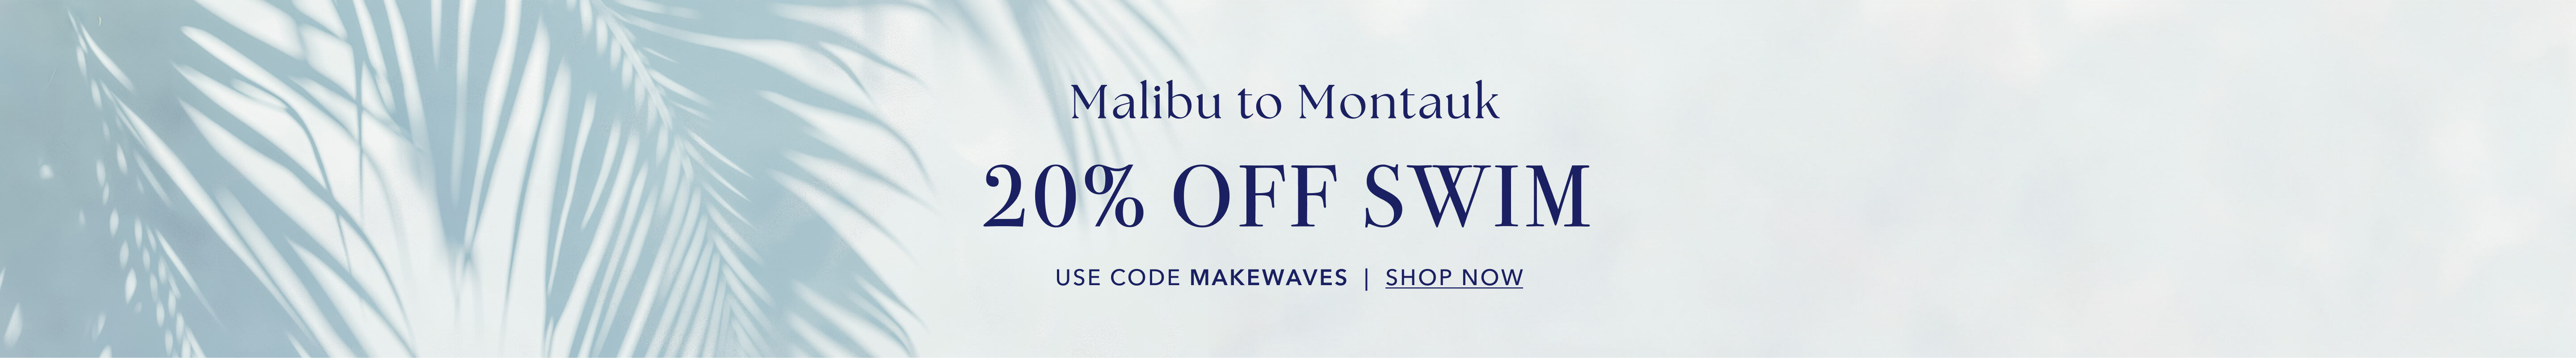 Malibu to Montauk | 20% OFF SWIM | USE CODE MAKEWAVES | SHOP NOW